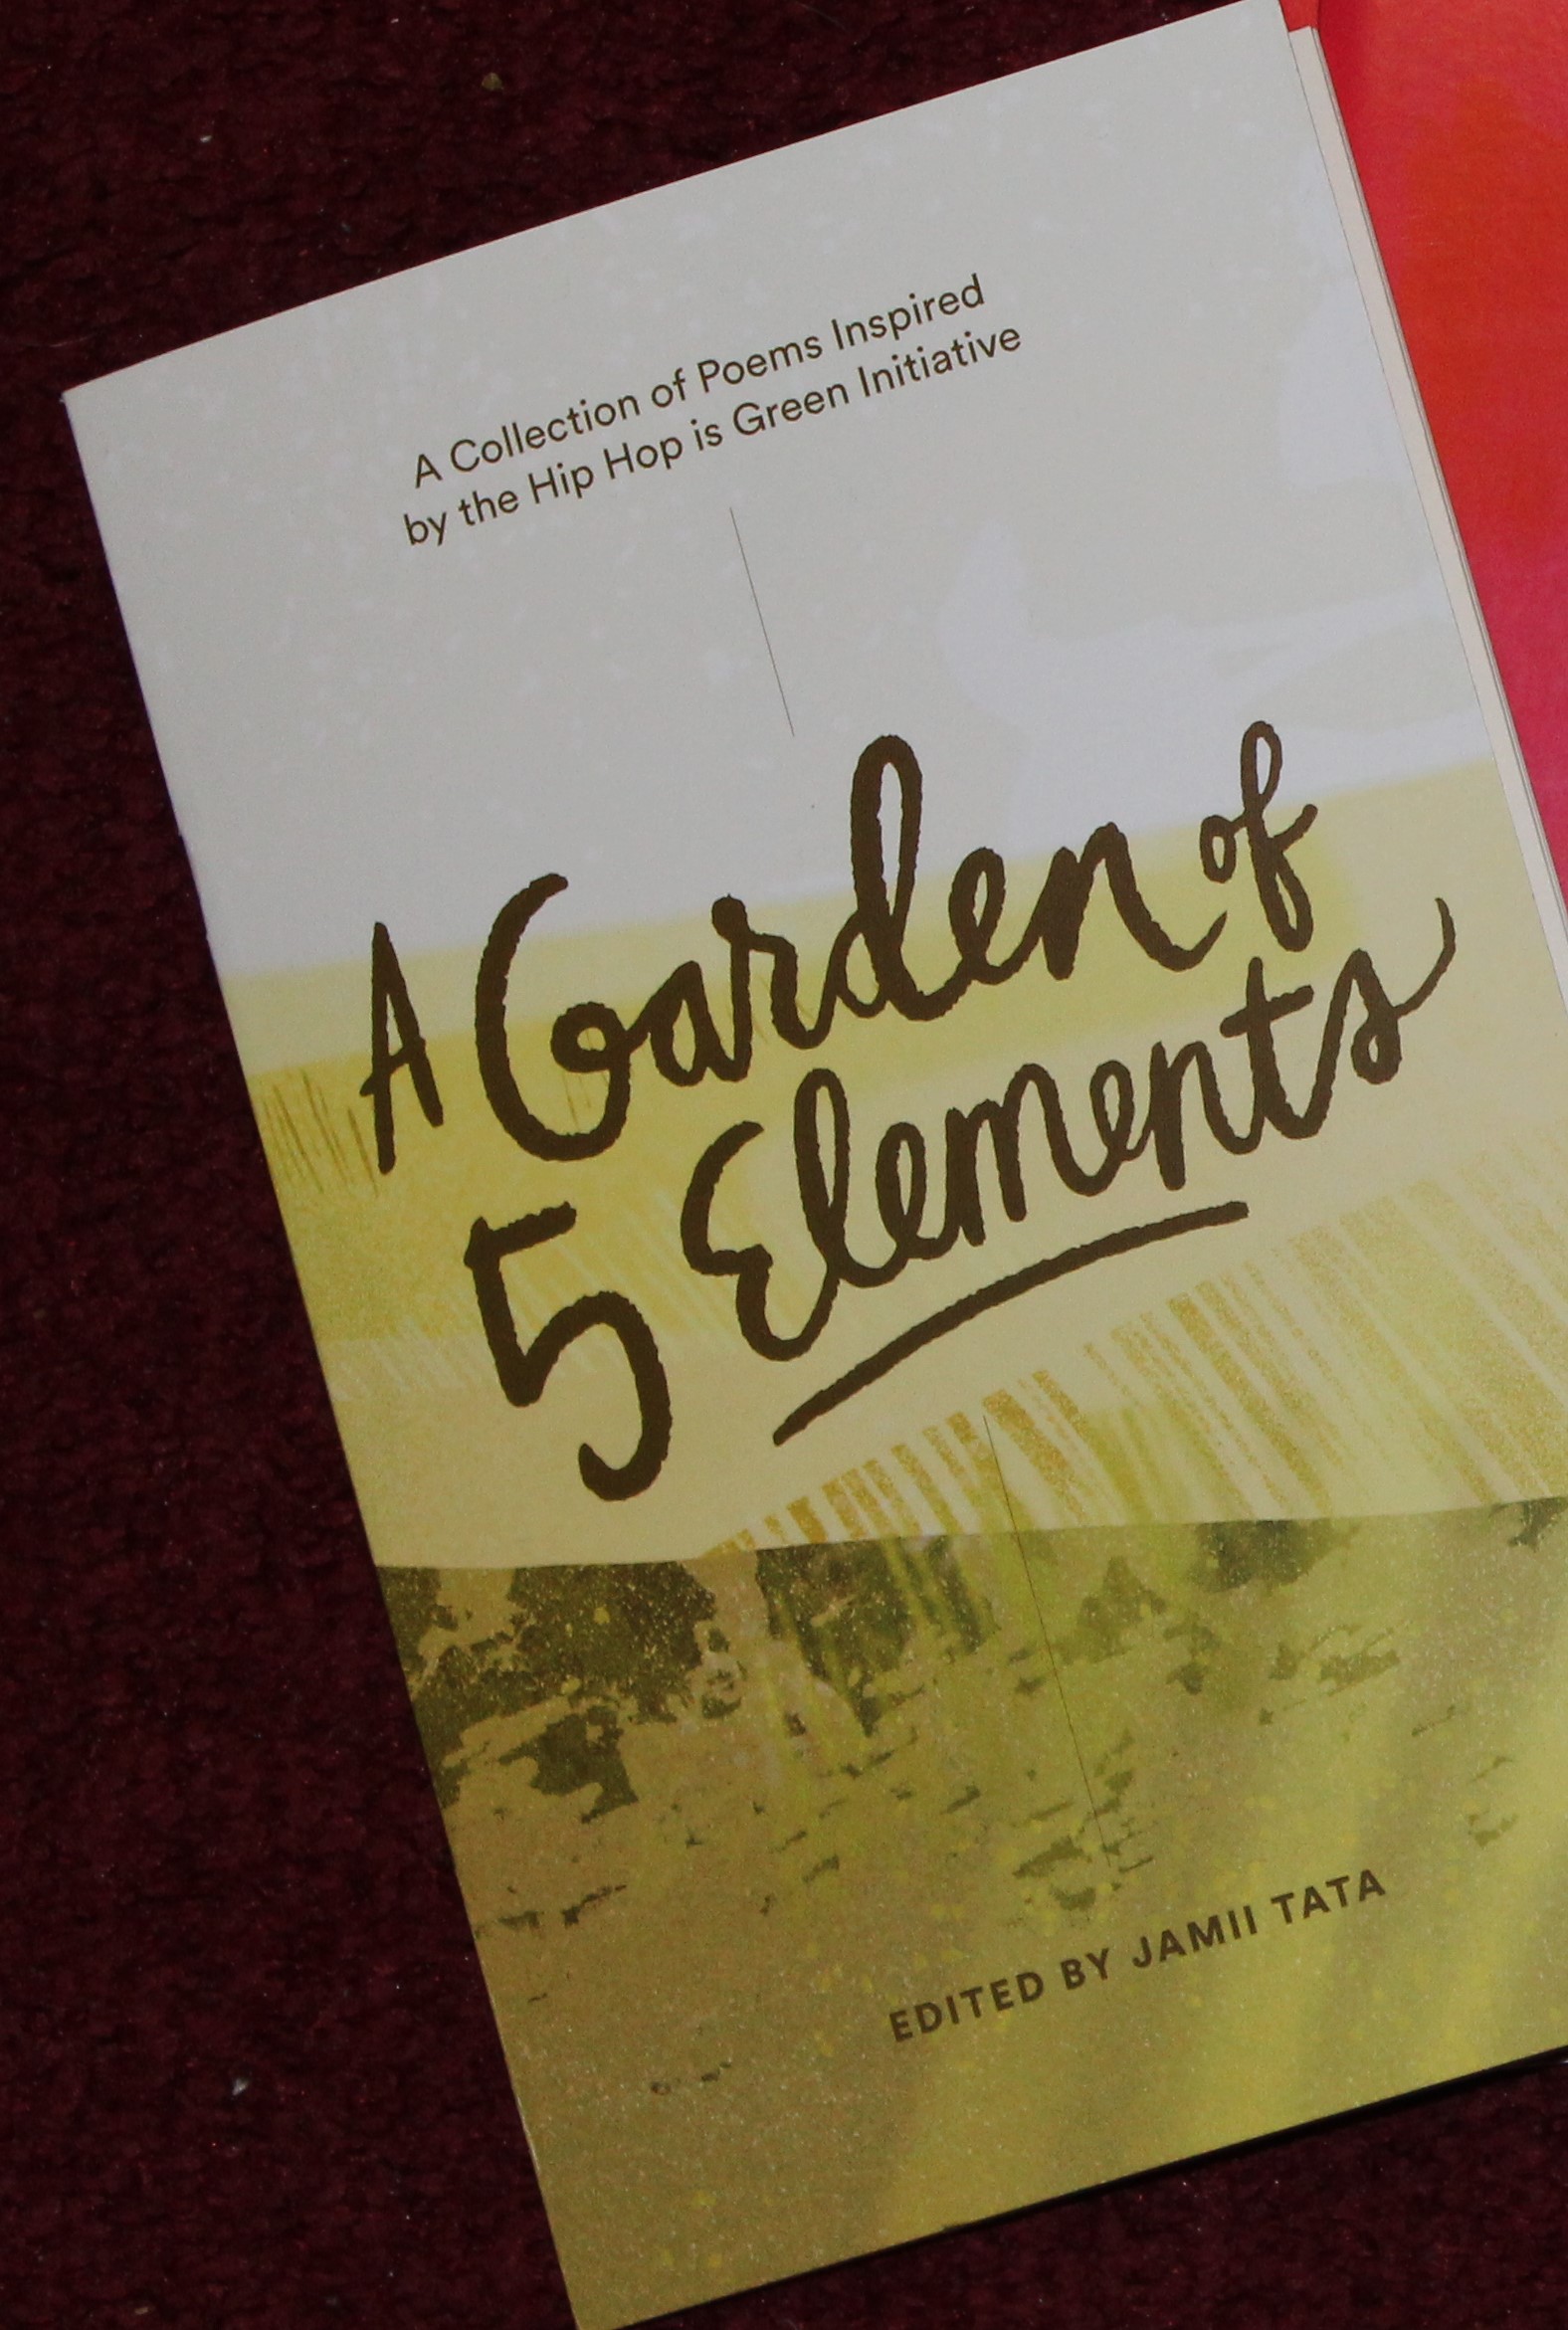 A Garden of 5 Elements